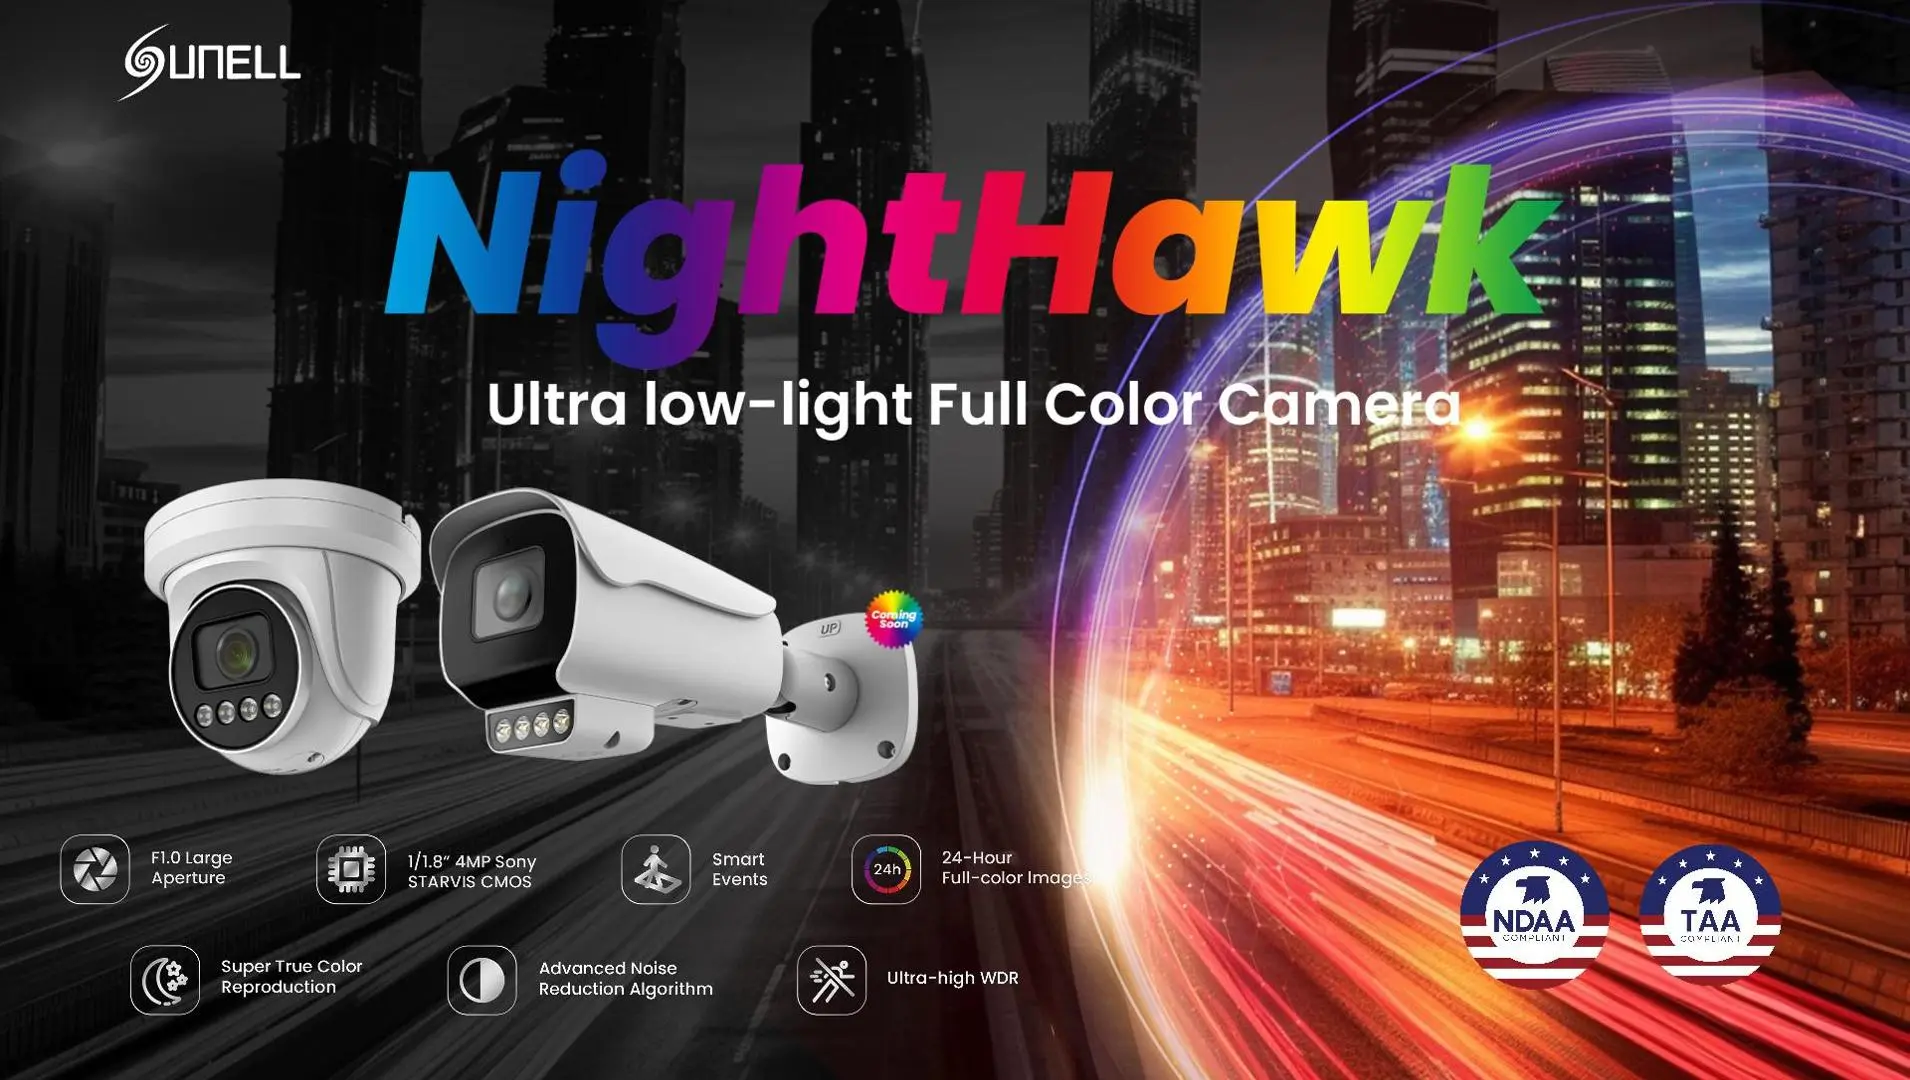 Sunell Nighthawk Ultra-low-light Intelligent Full-color Camera